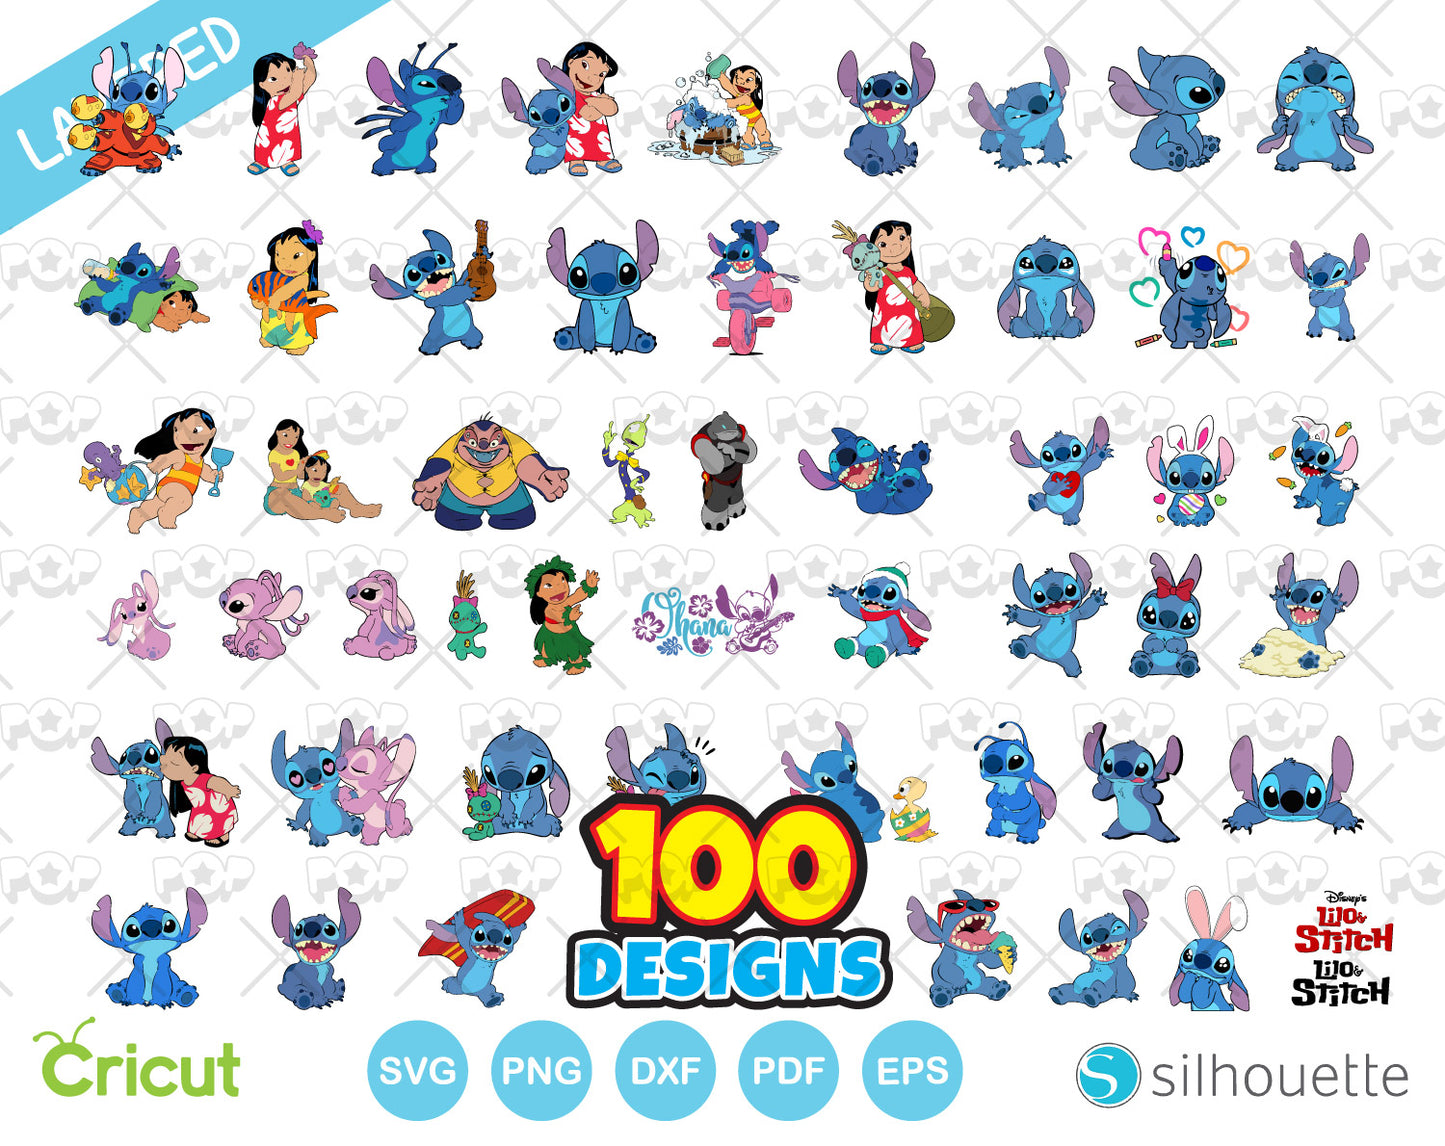 Lilo & Stitch clipart bundle, Lilo and Stitch SVG cut files for Cricut / Silhouette, PNG DXF, instant download